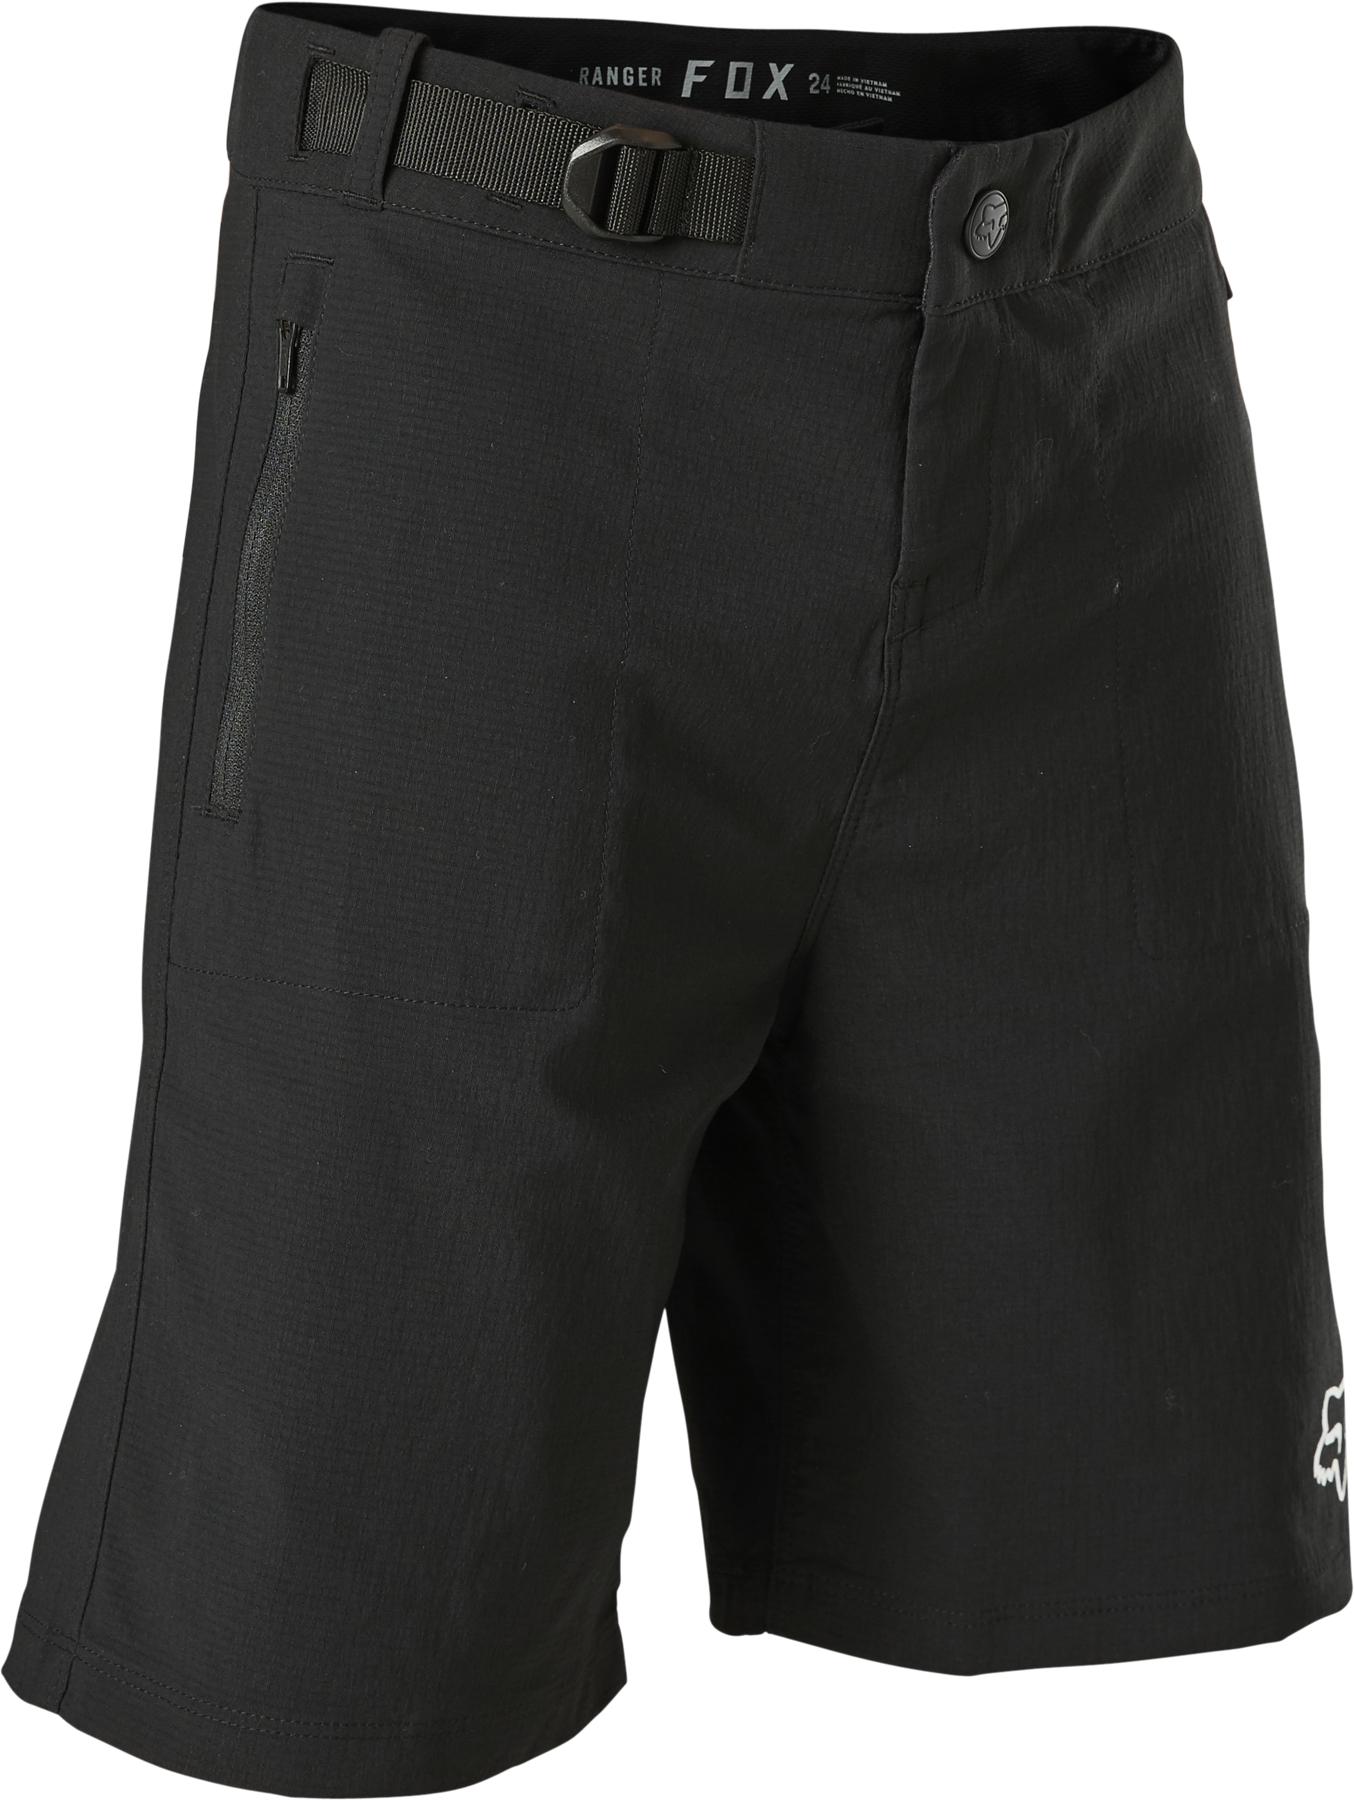 Fox Racing Youth Ranger Shorts - Black